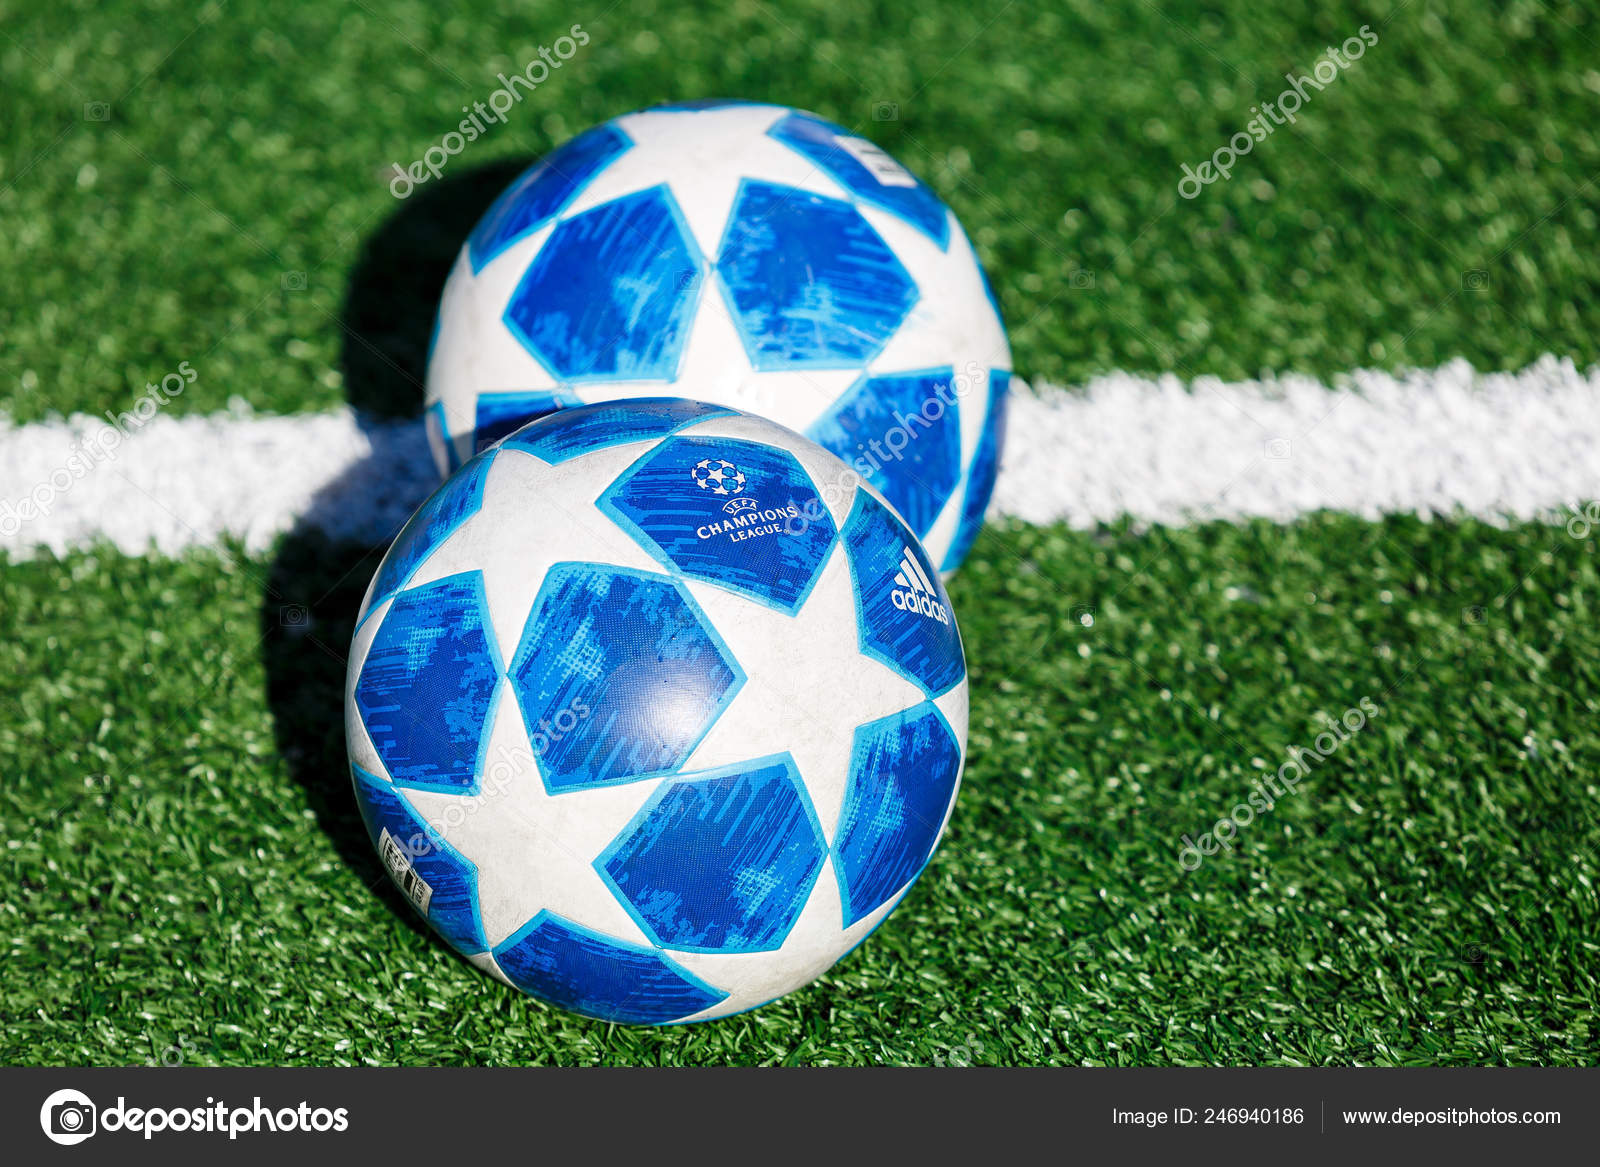 adidas 2018 uefa champions league finale top training soccer ball